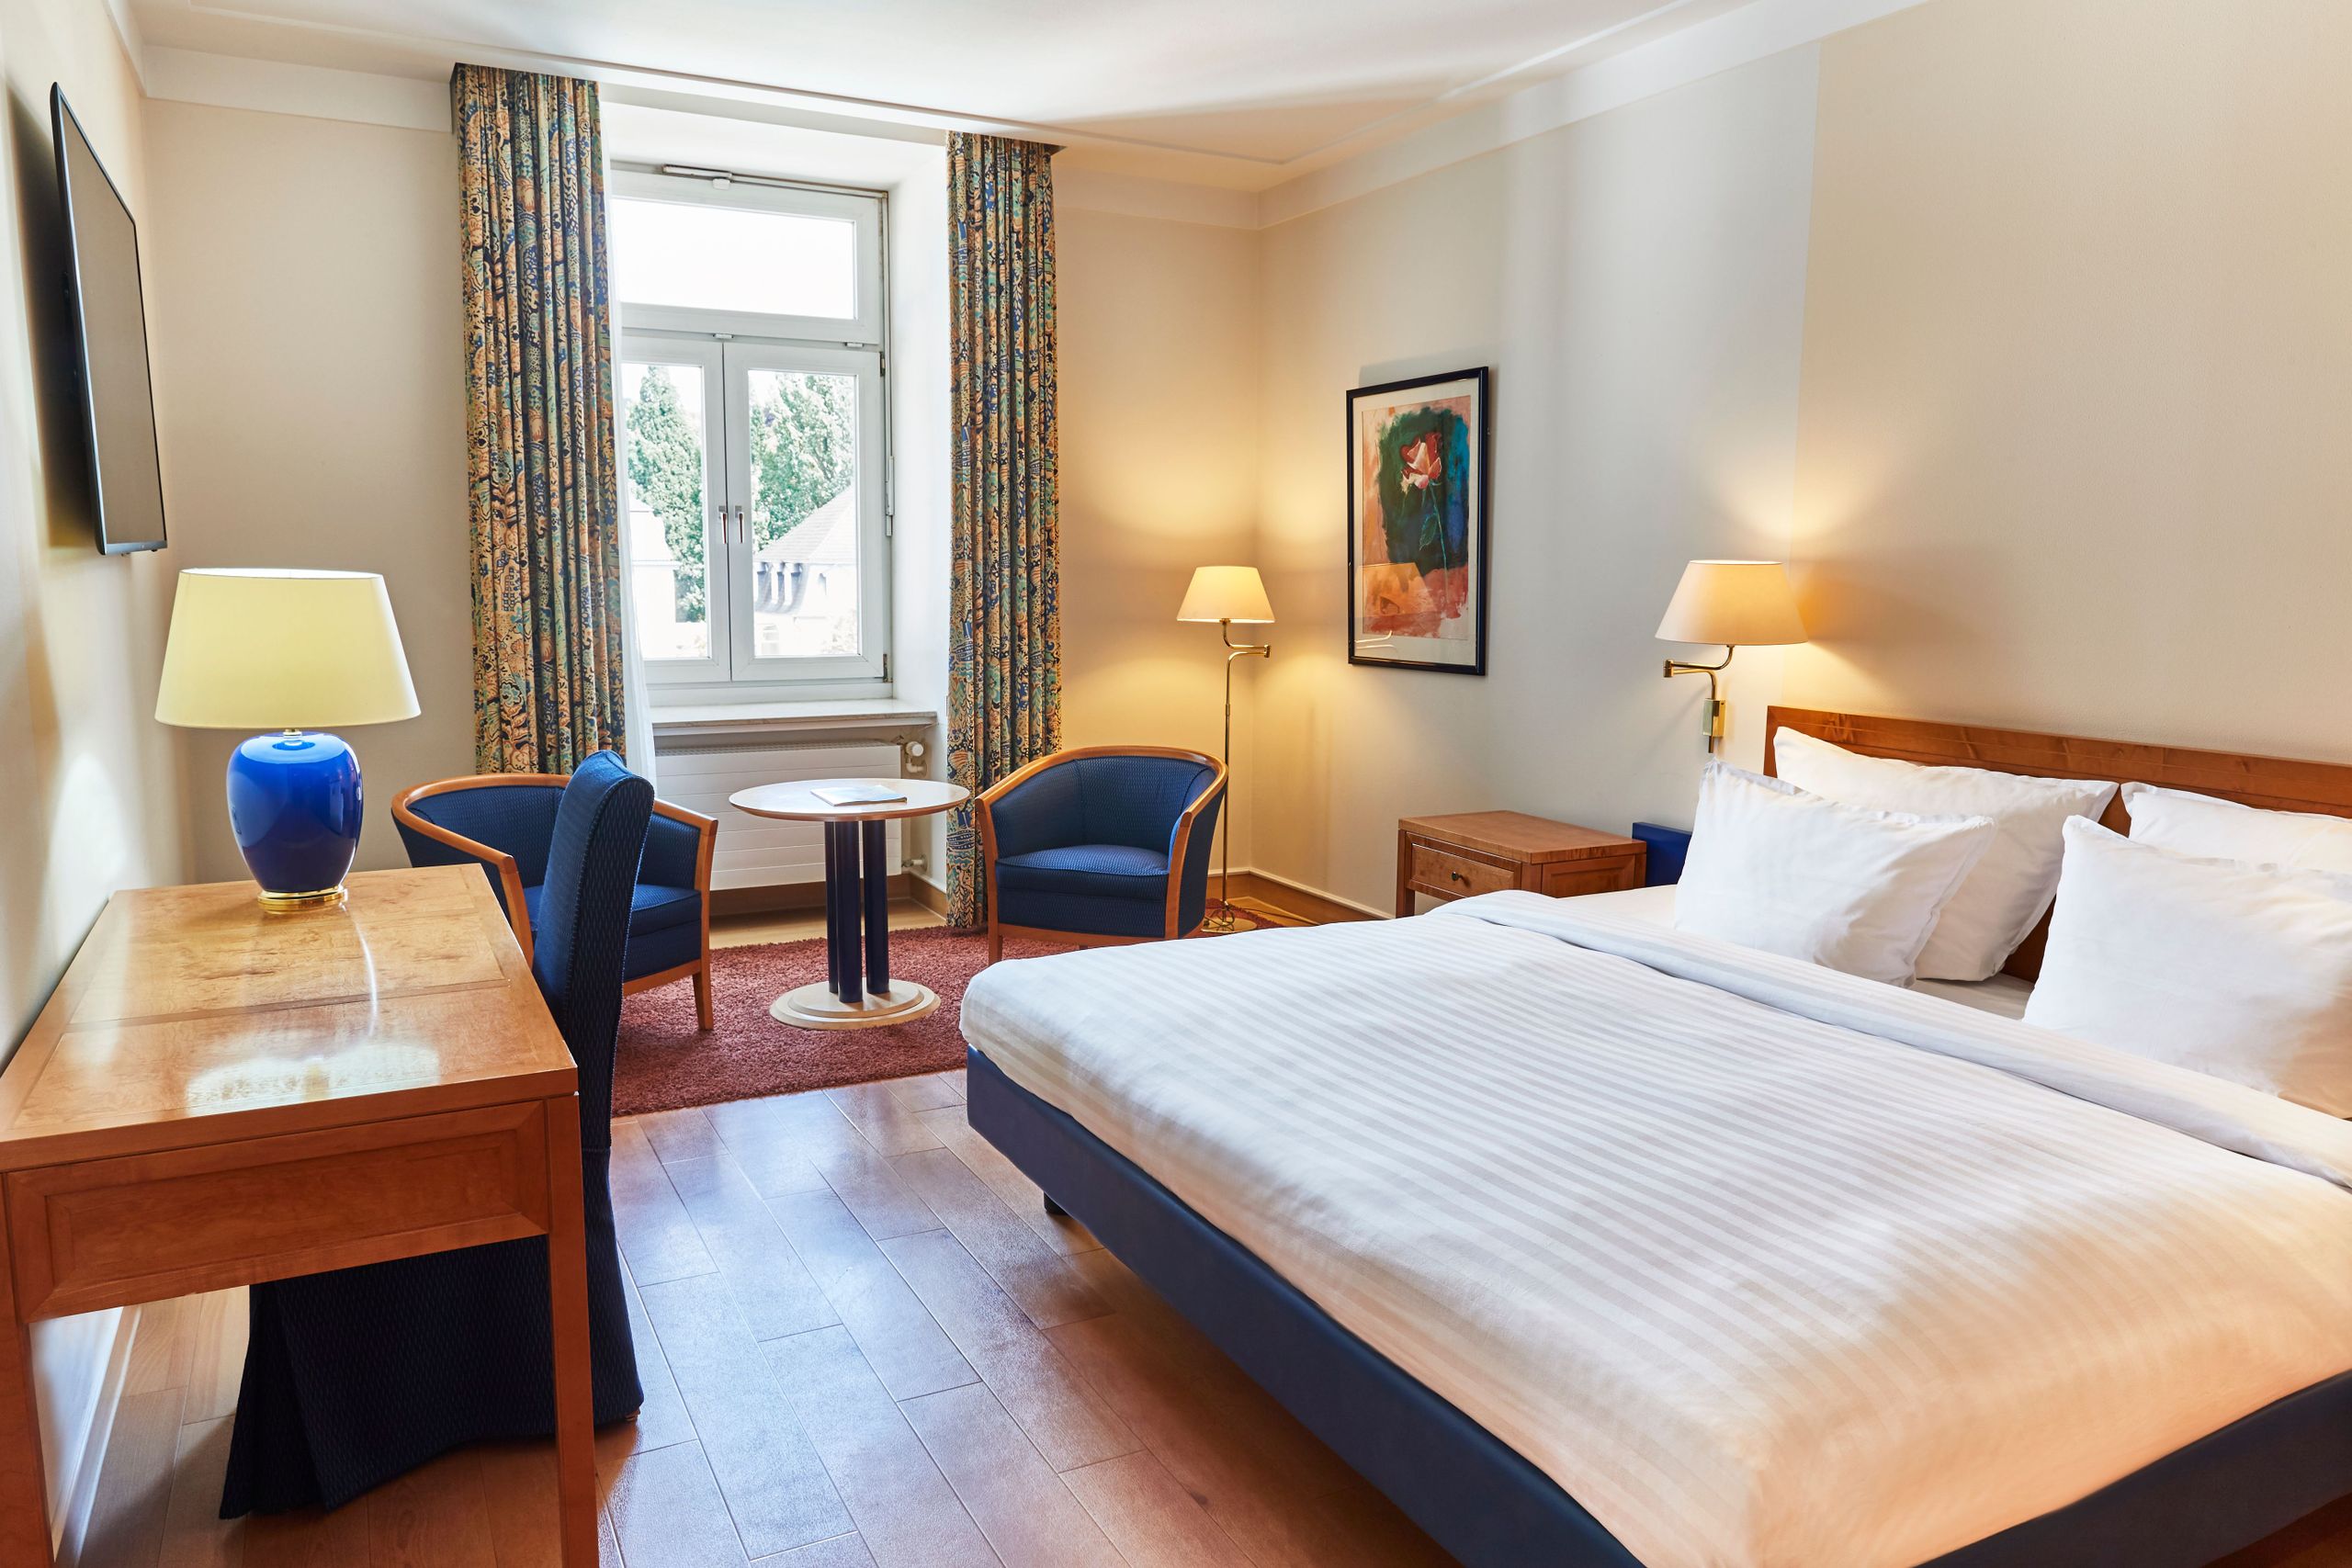 Steigenberger Hotel & Spa, Bad Pyrmont - Comfort Double Room